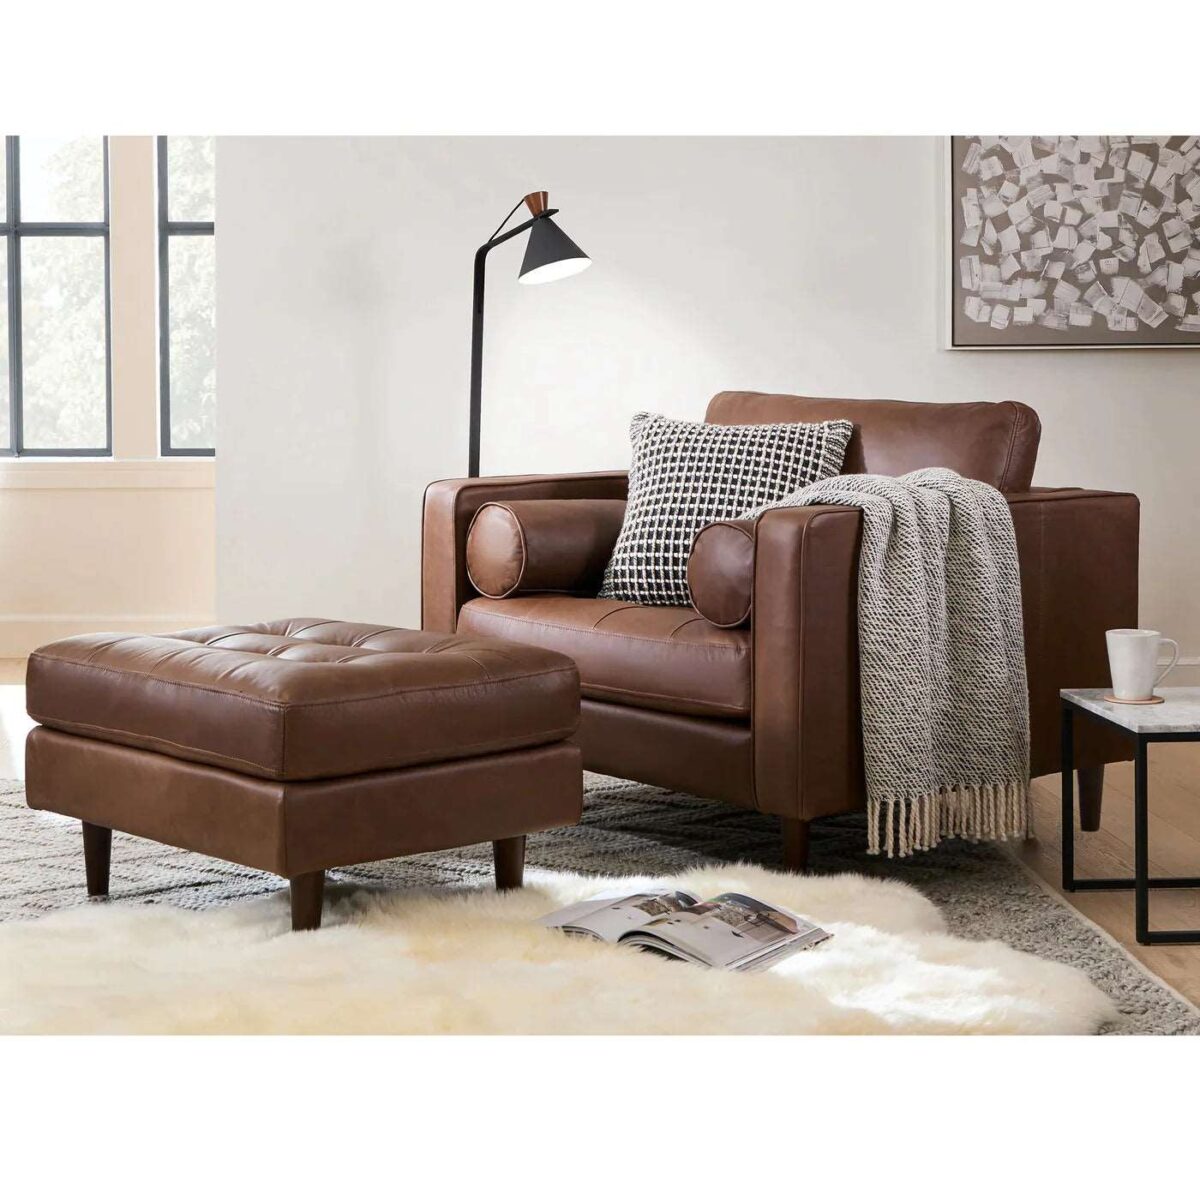 Chic Retreat: Elegant 2-Seater Sofa for Modern Homes